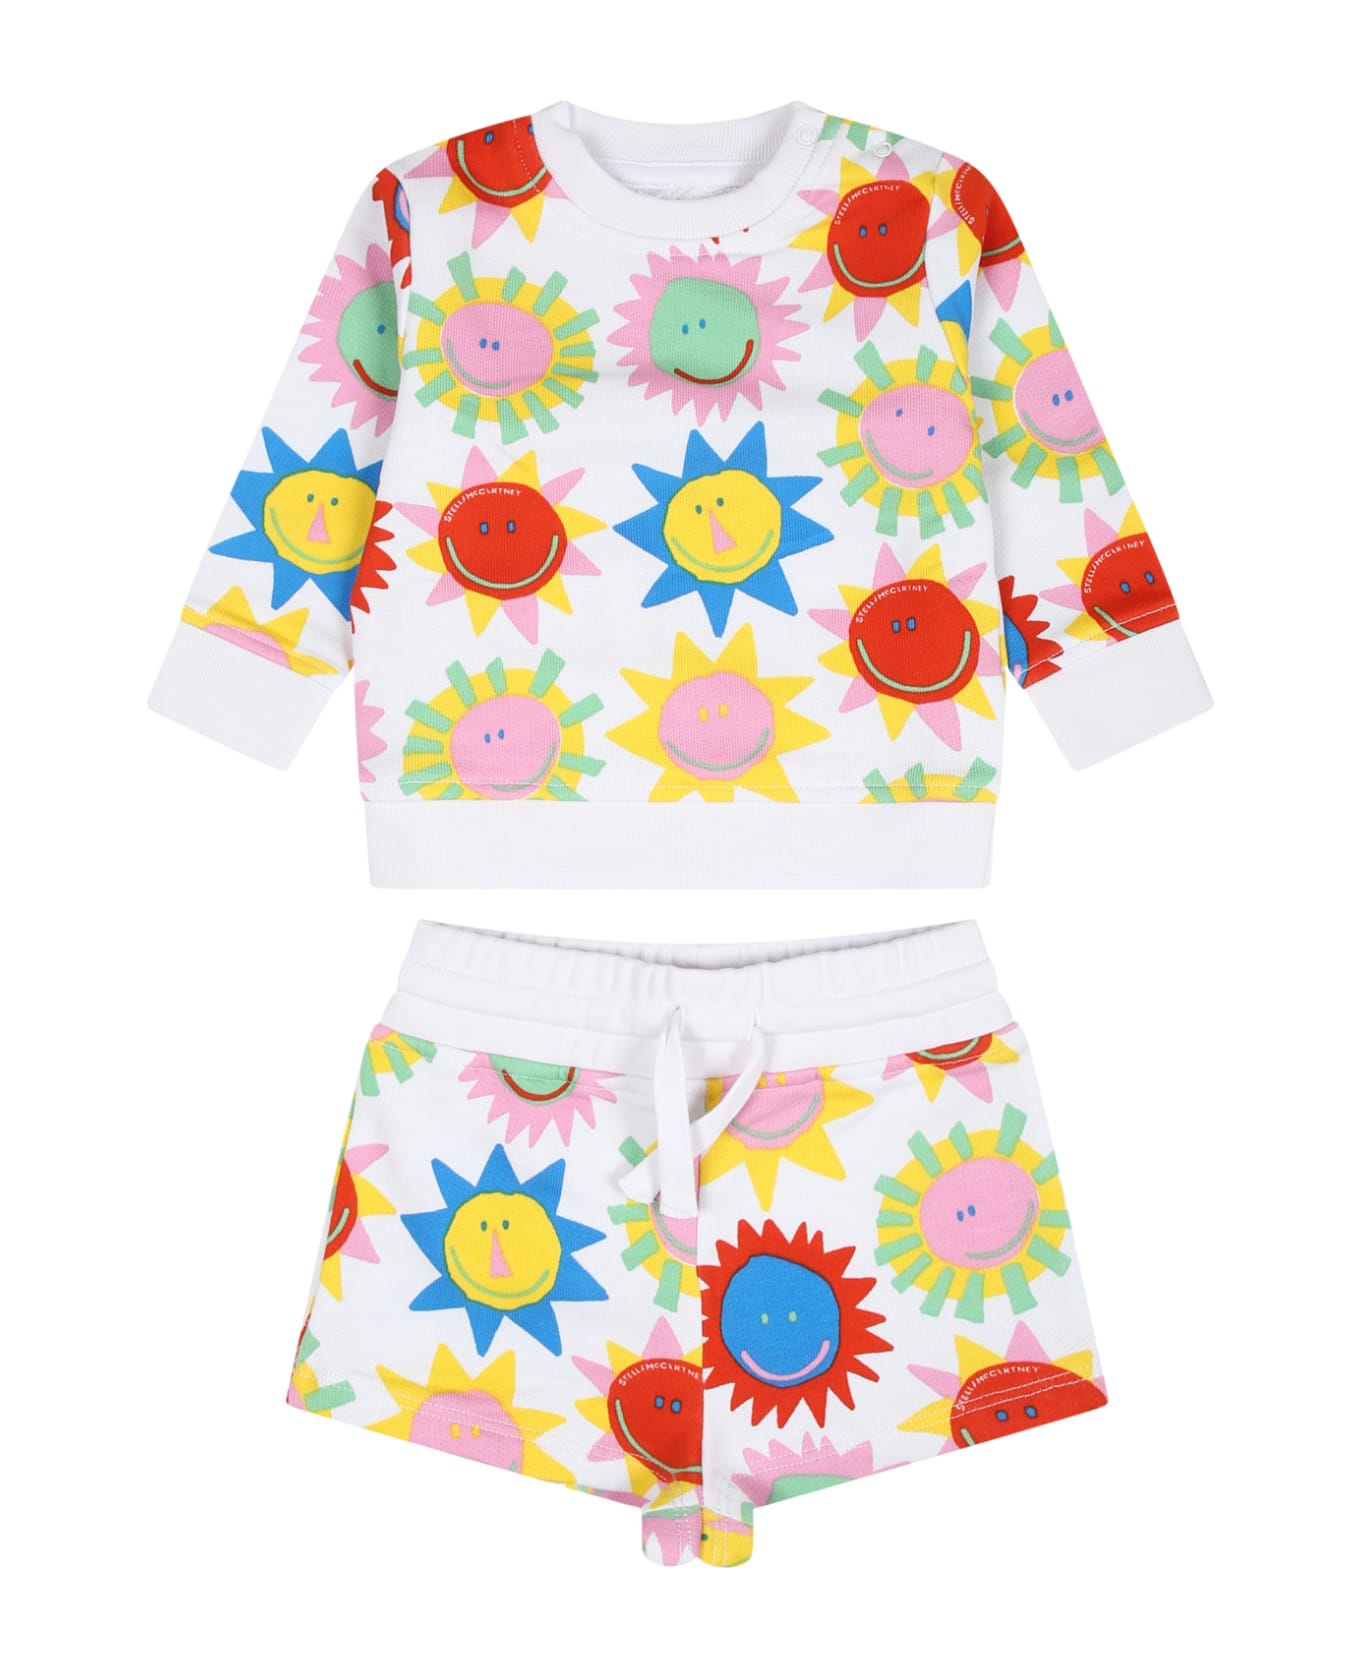 Stella McCartney Kids White Set For Baby Girl With Sun - White